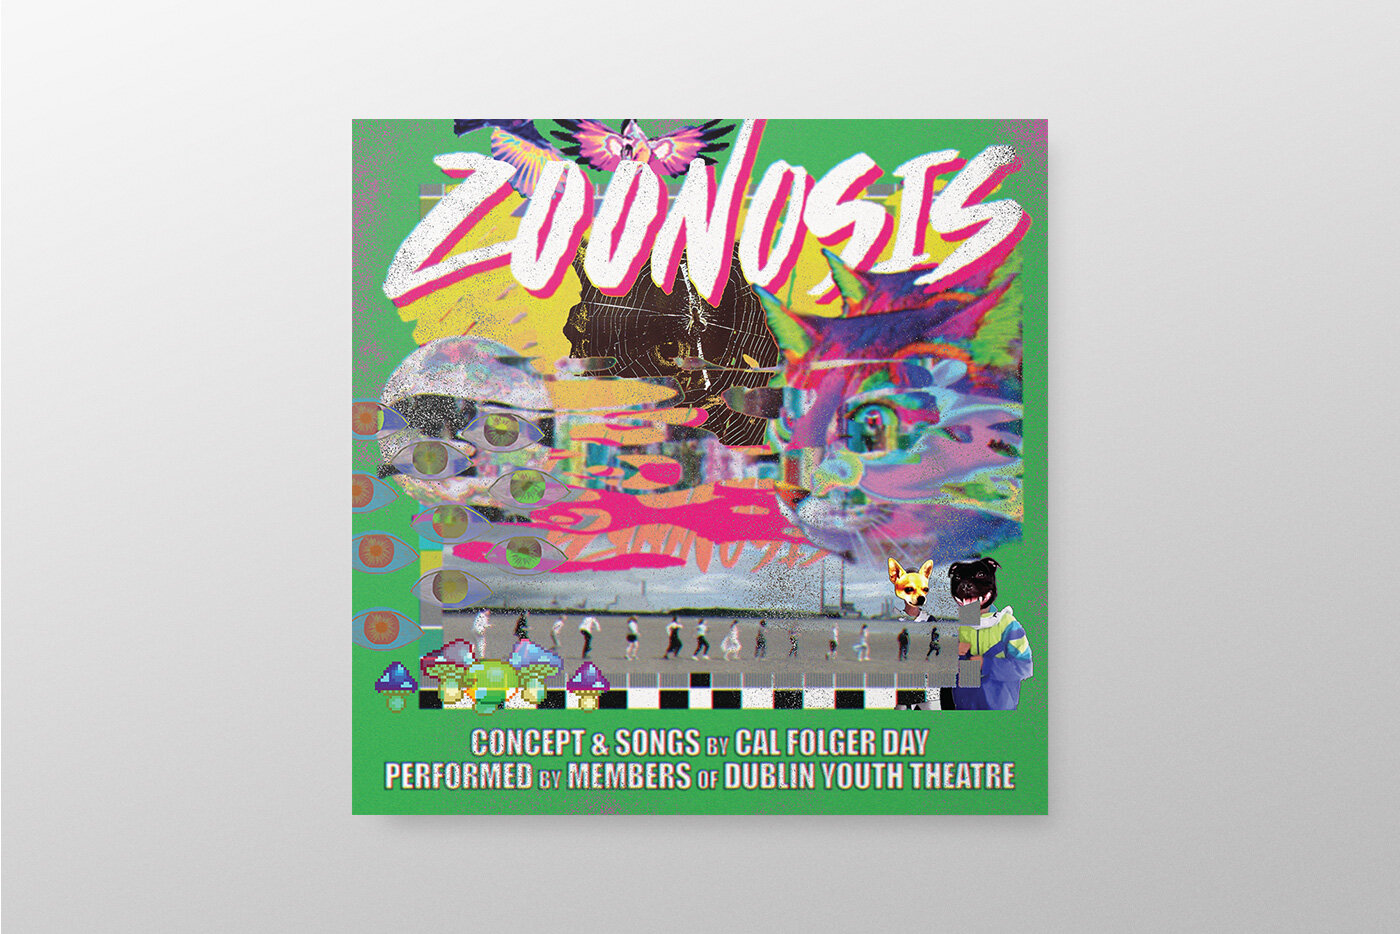 Zoonosis Album Art